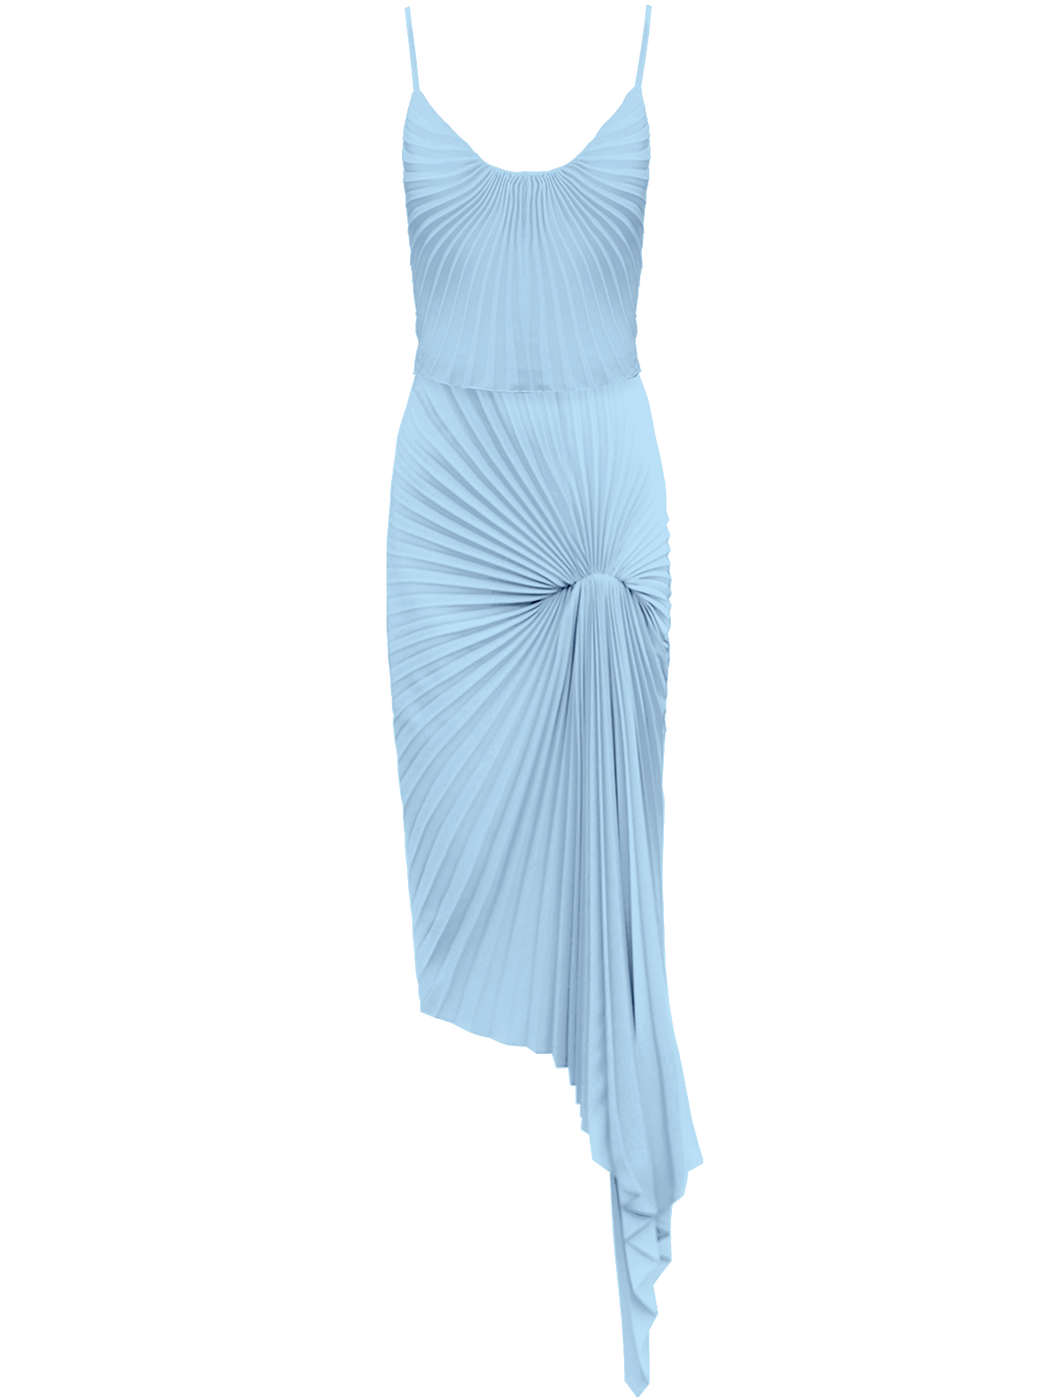 Georgia Hardinge Blue Dazed Dress bestseller cocktail pleated asymmetric strappy wedding guest occasionwear